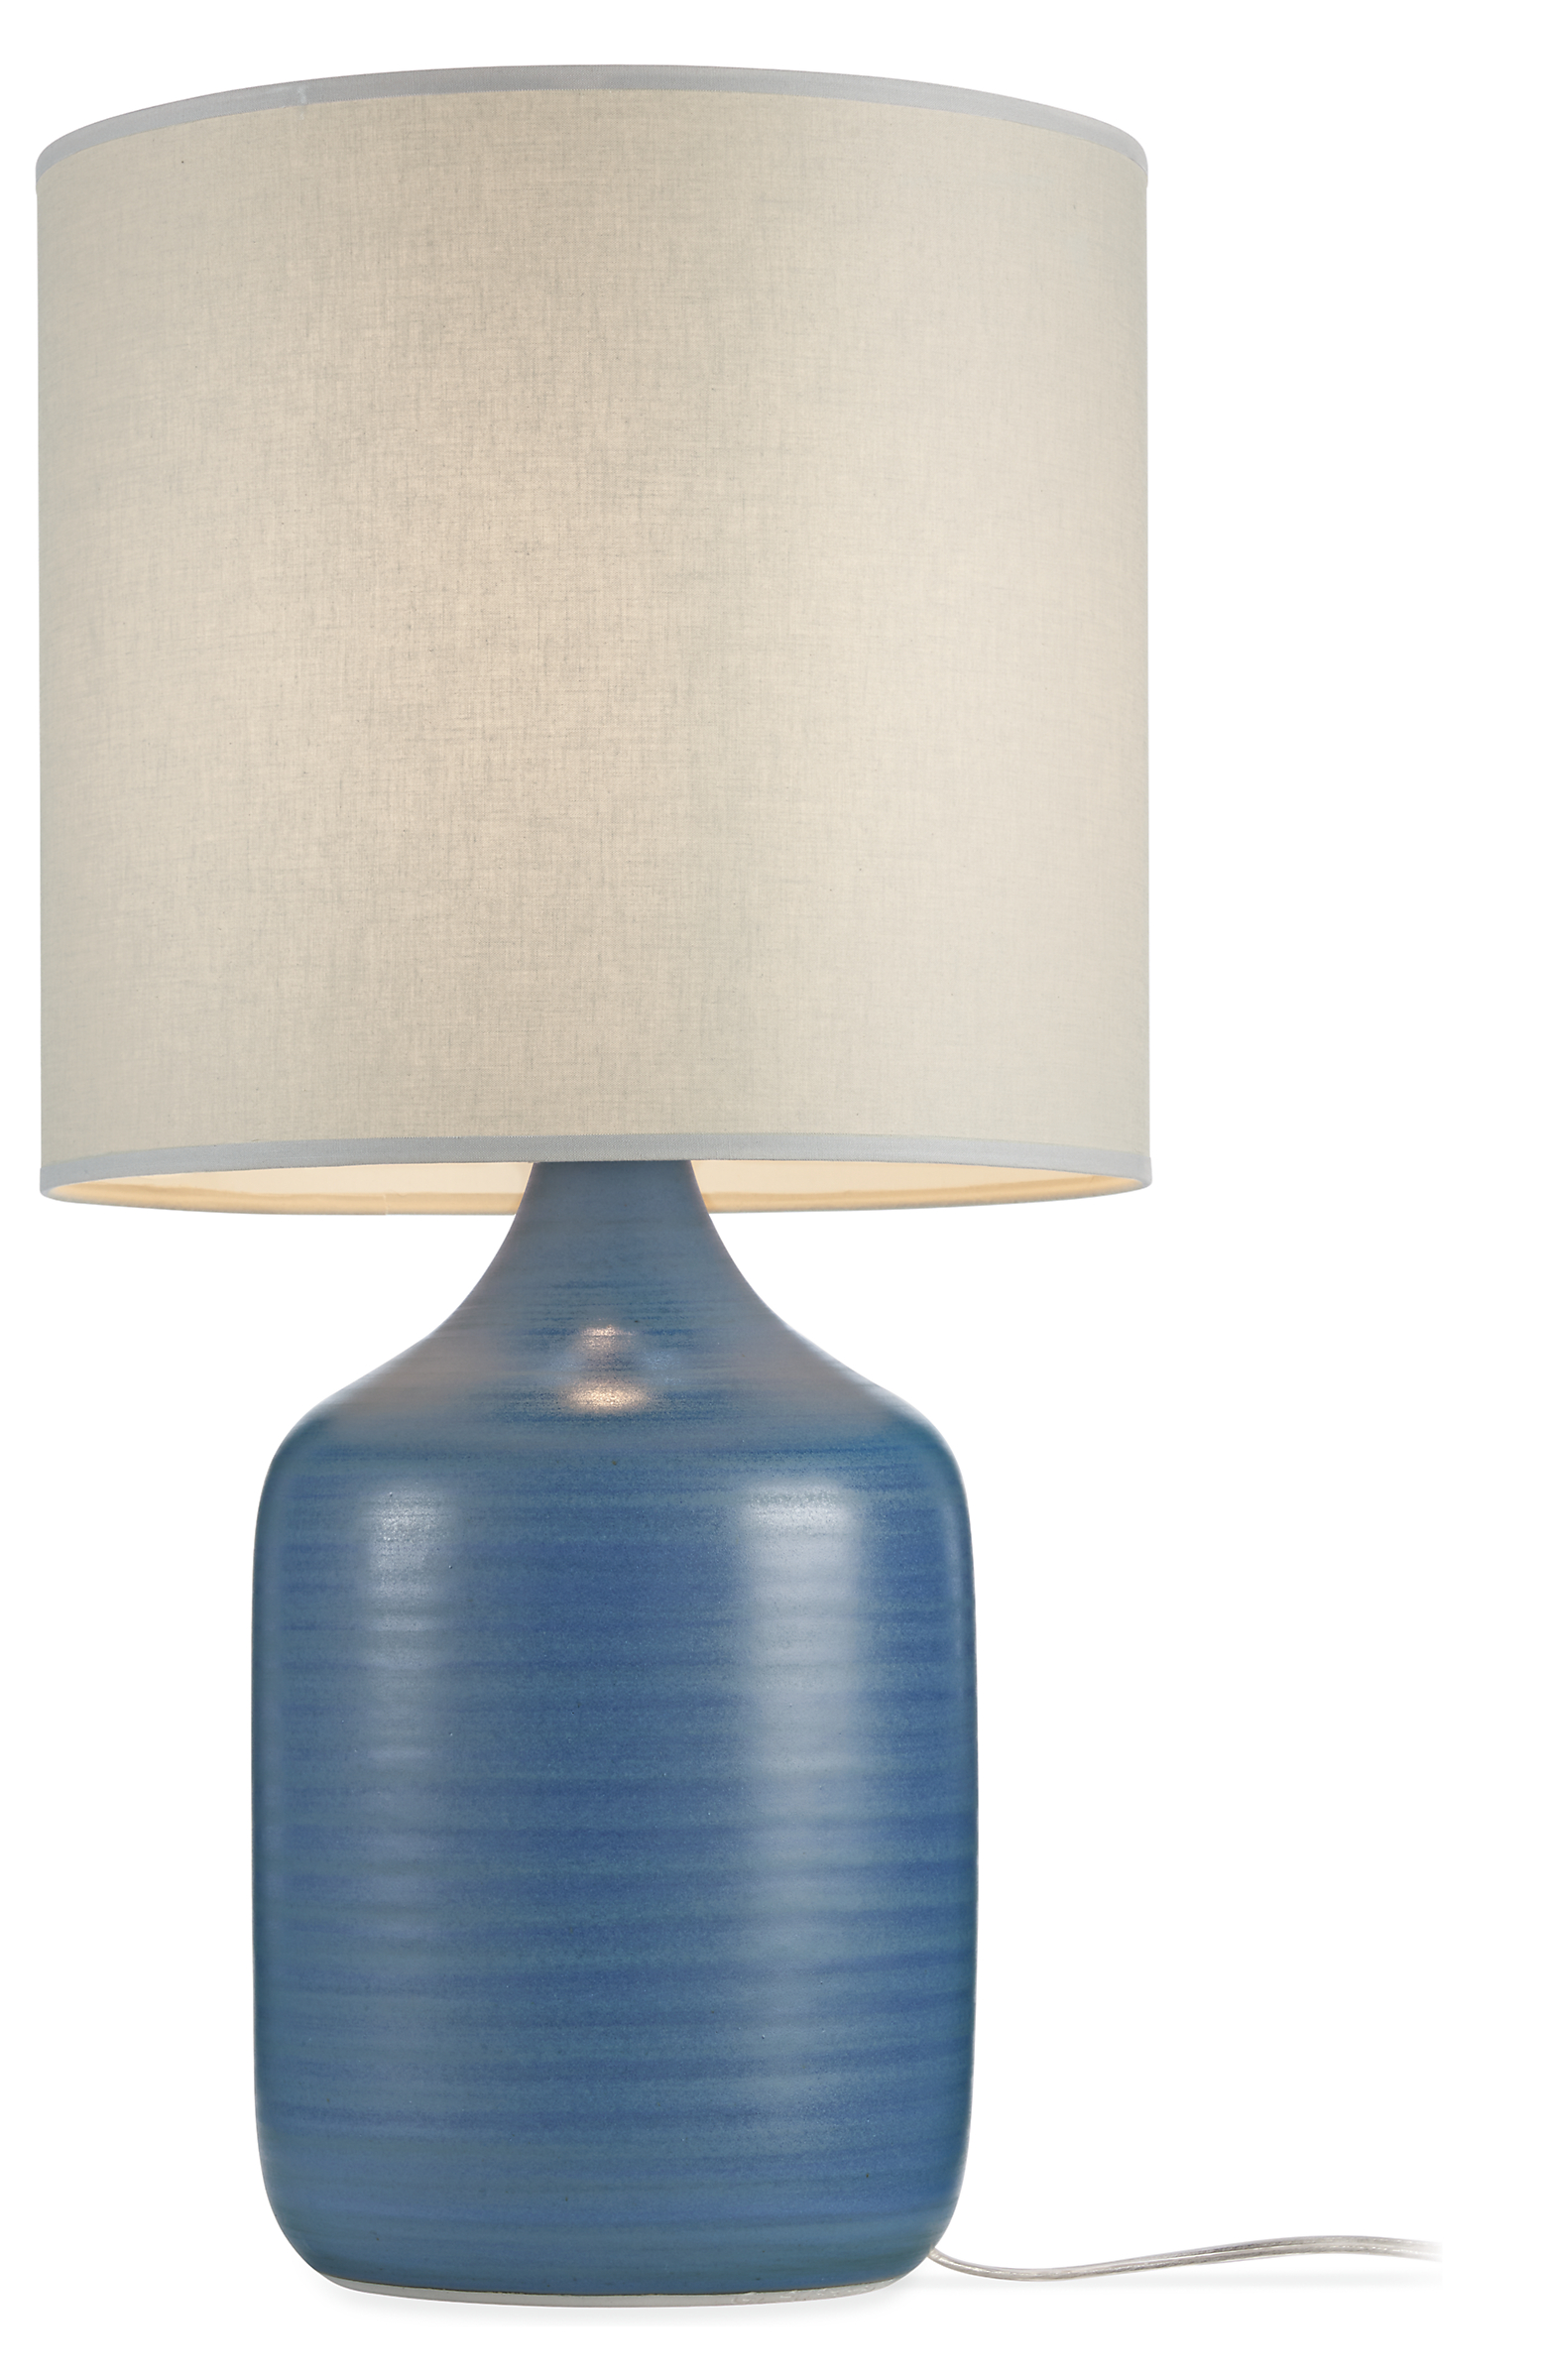 Serena Table Lamp